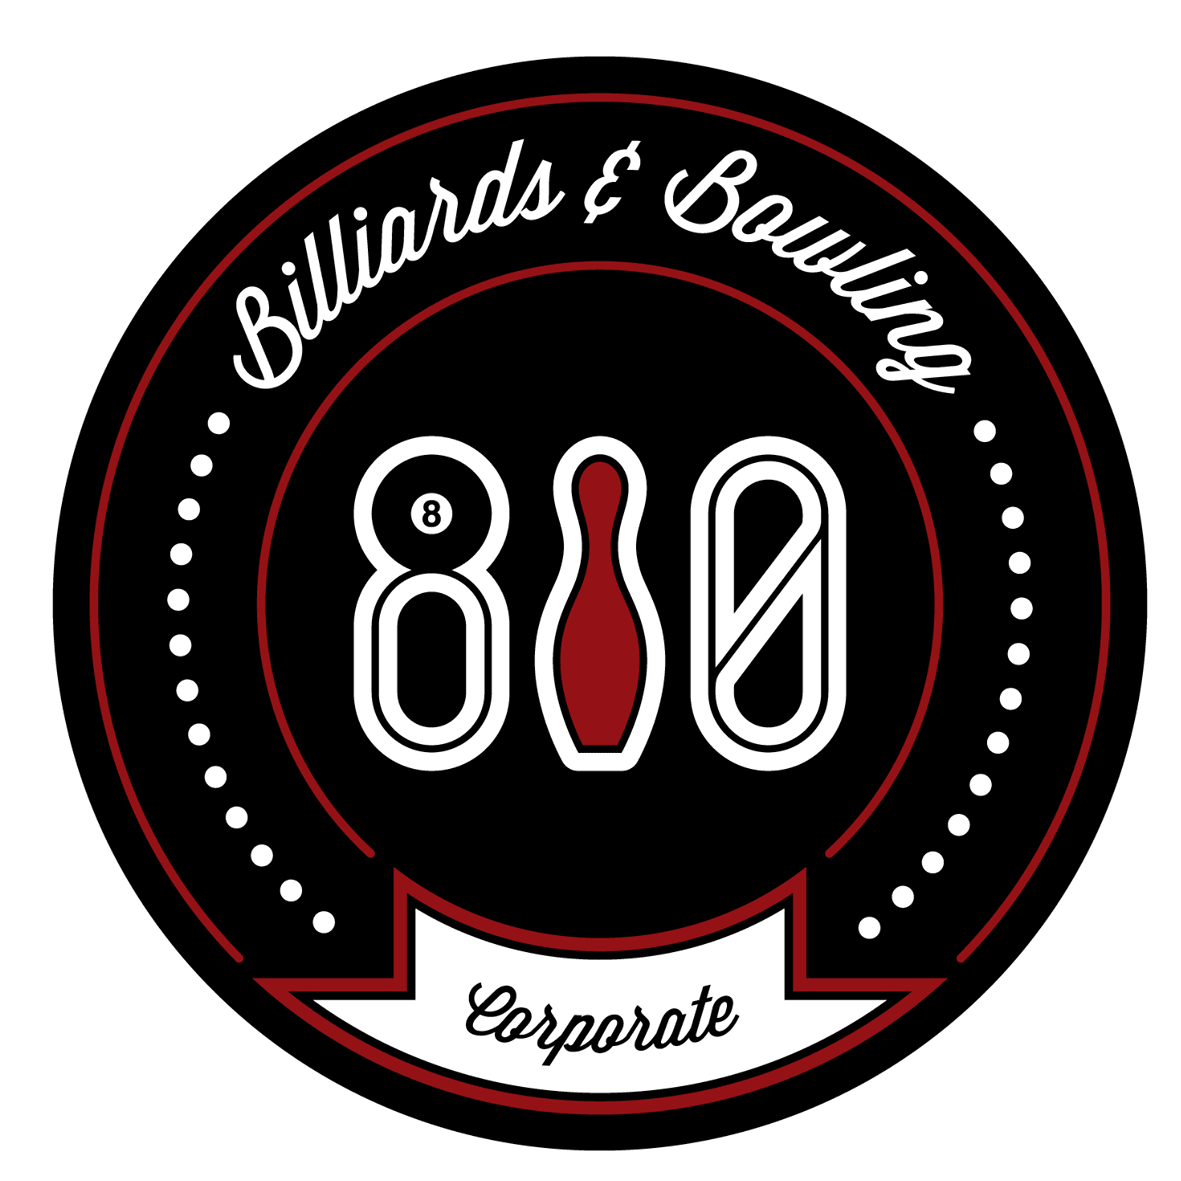 810 Billiards & Bowling - Market Common logo